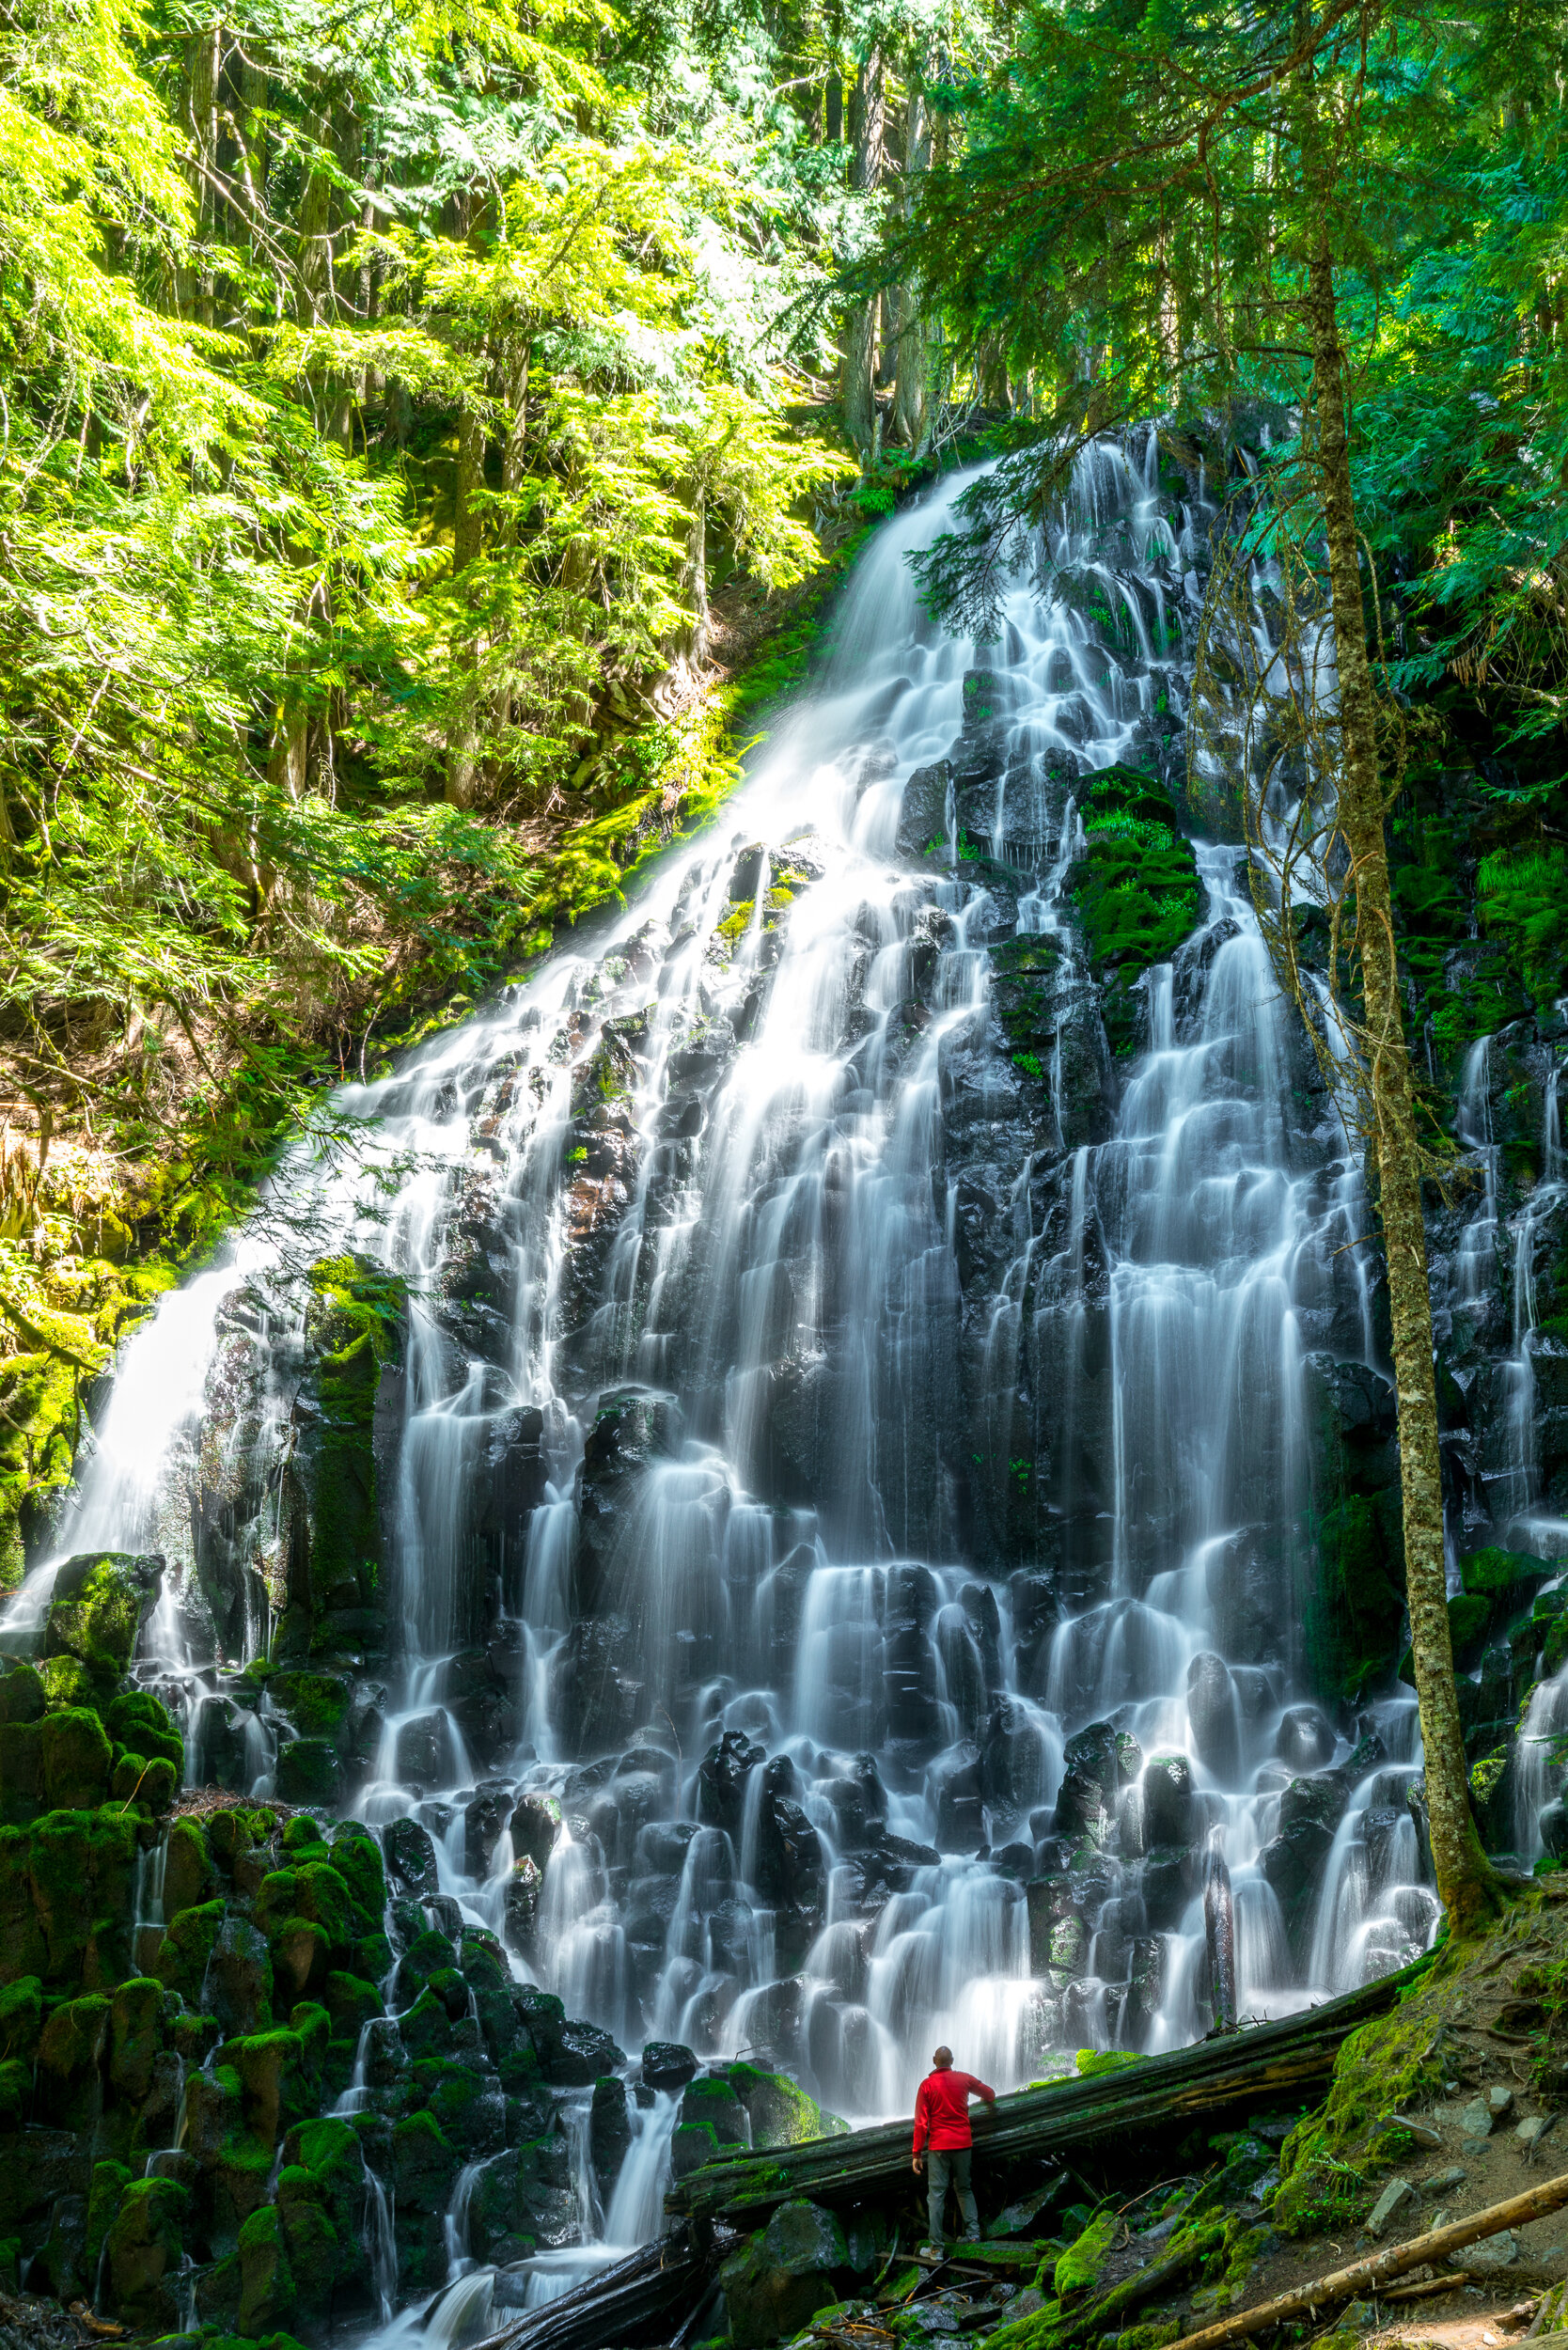 Ramona Falls, Oregon